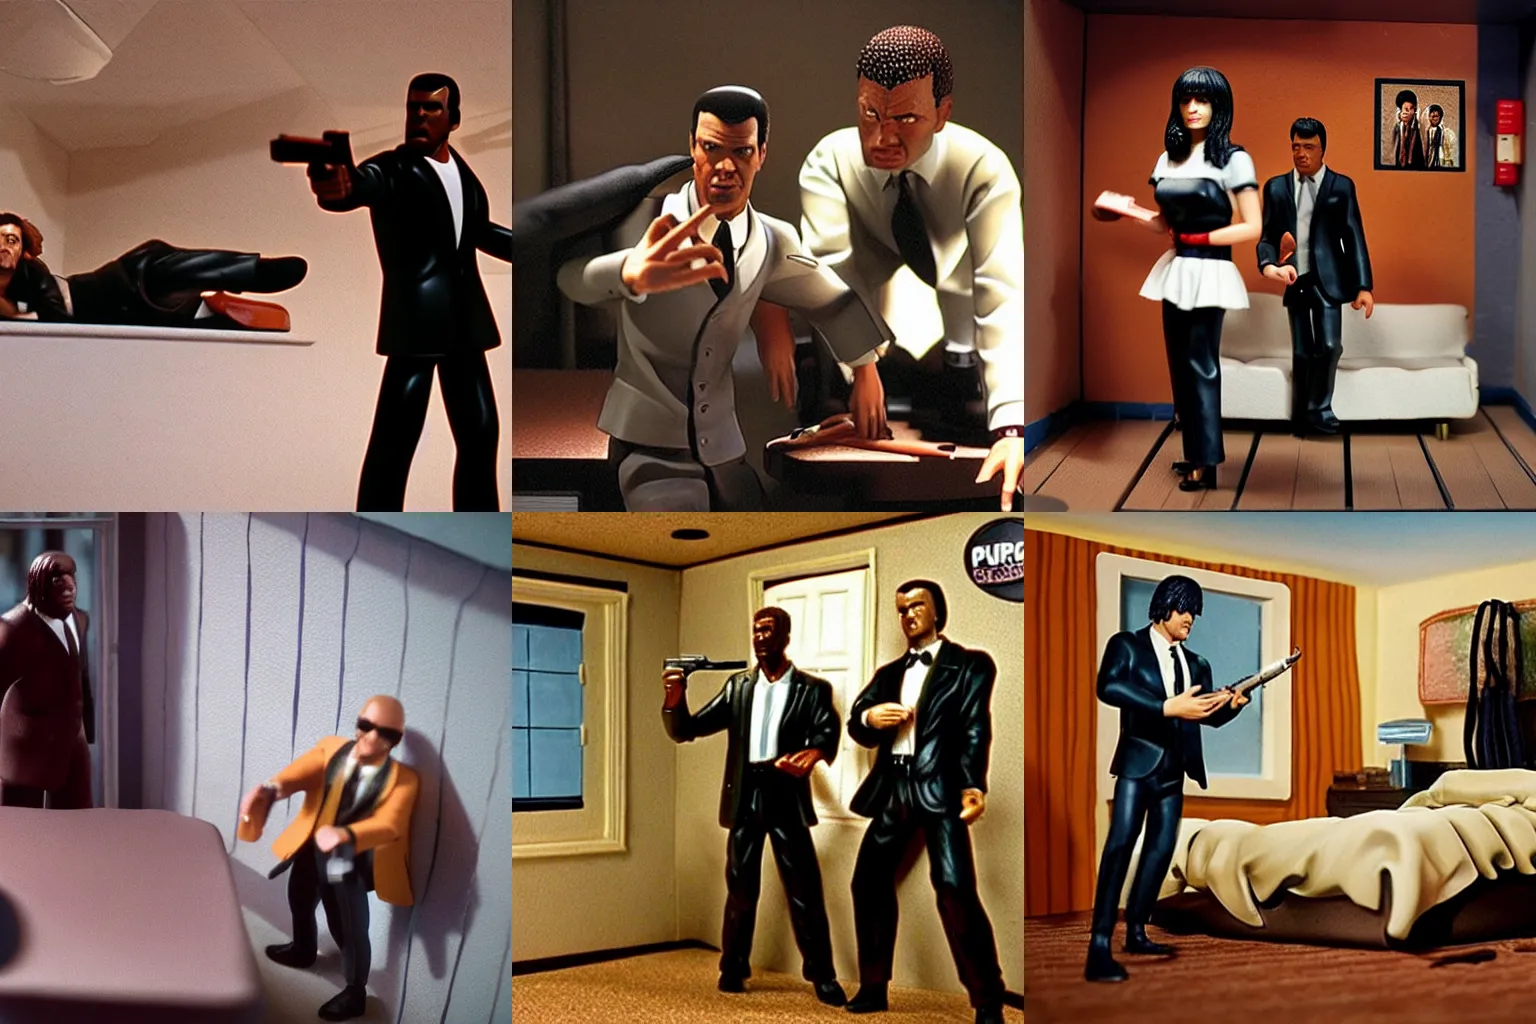 Prompt: Pulp Fiction movie scene diorama, ultra realistic”